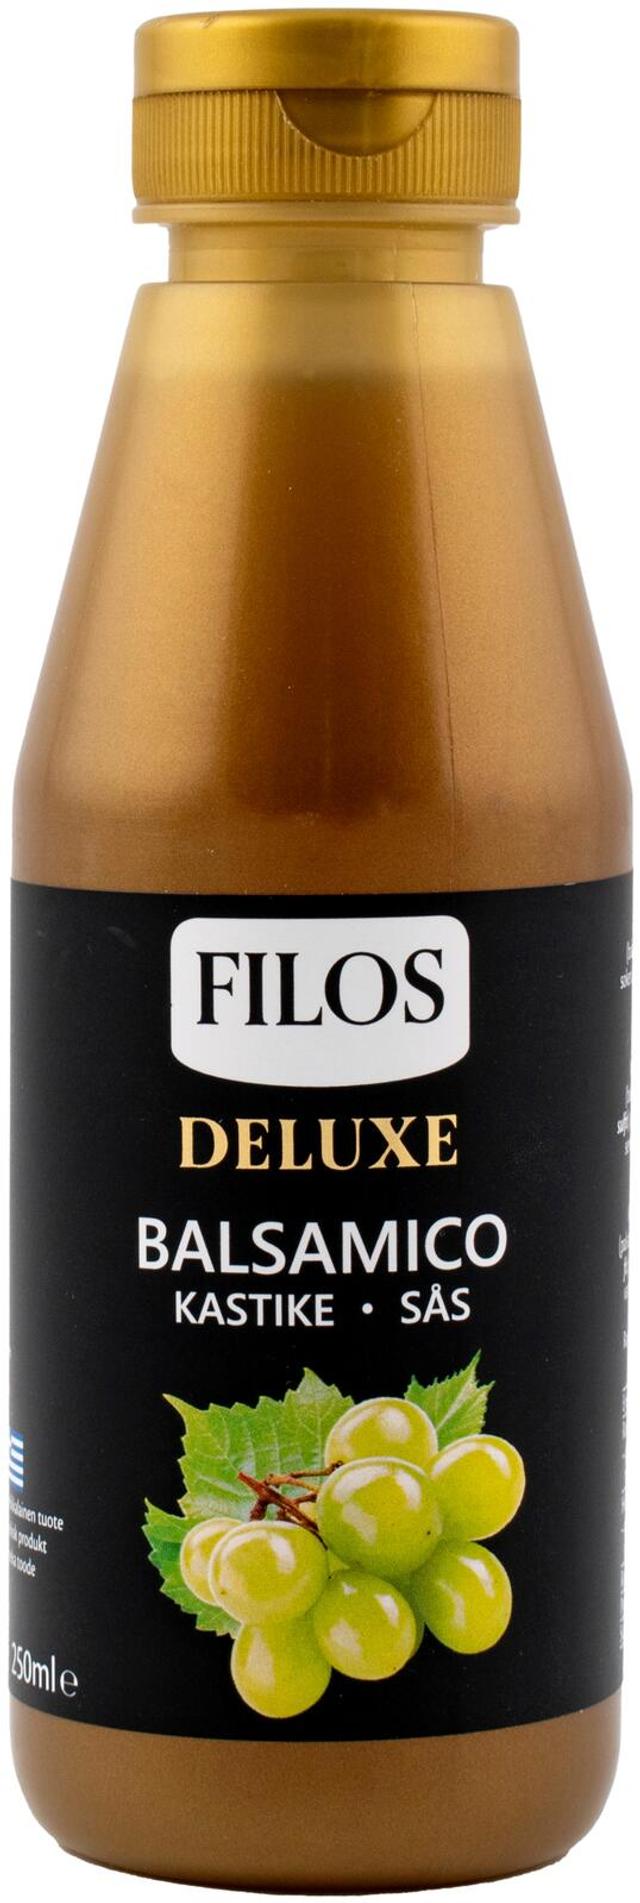 Filos Deluxe vaalea balsamicokastike 250ml